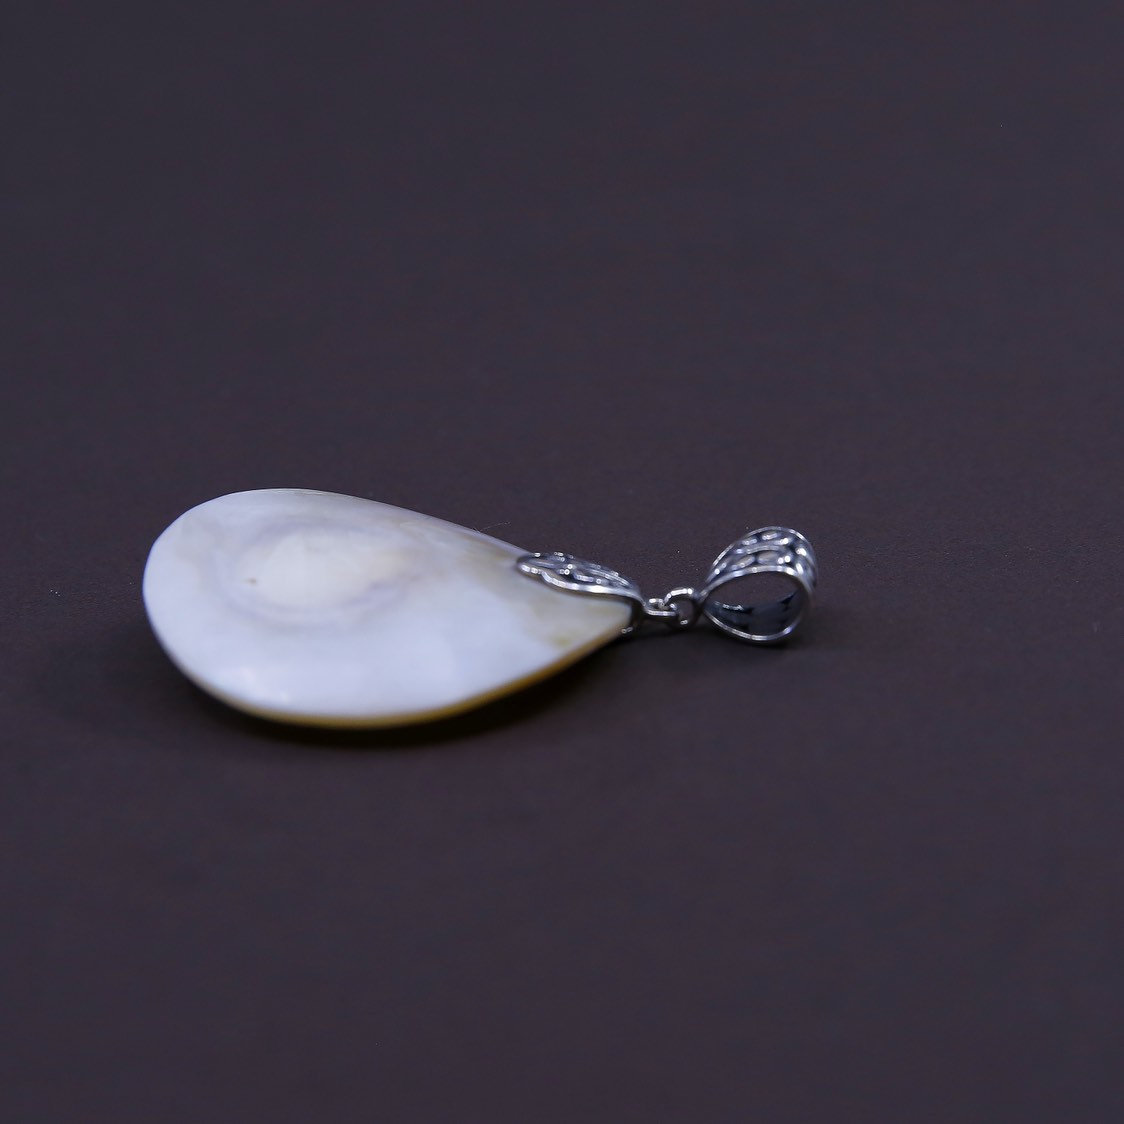 vtg Sterling silver handmade pendant, 925 w/ blister pearl N mother of pearl